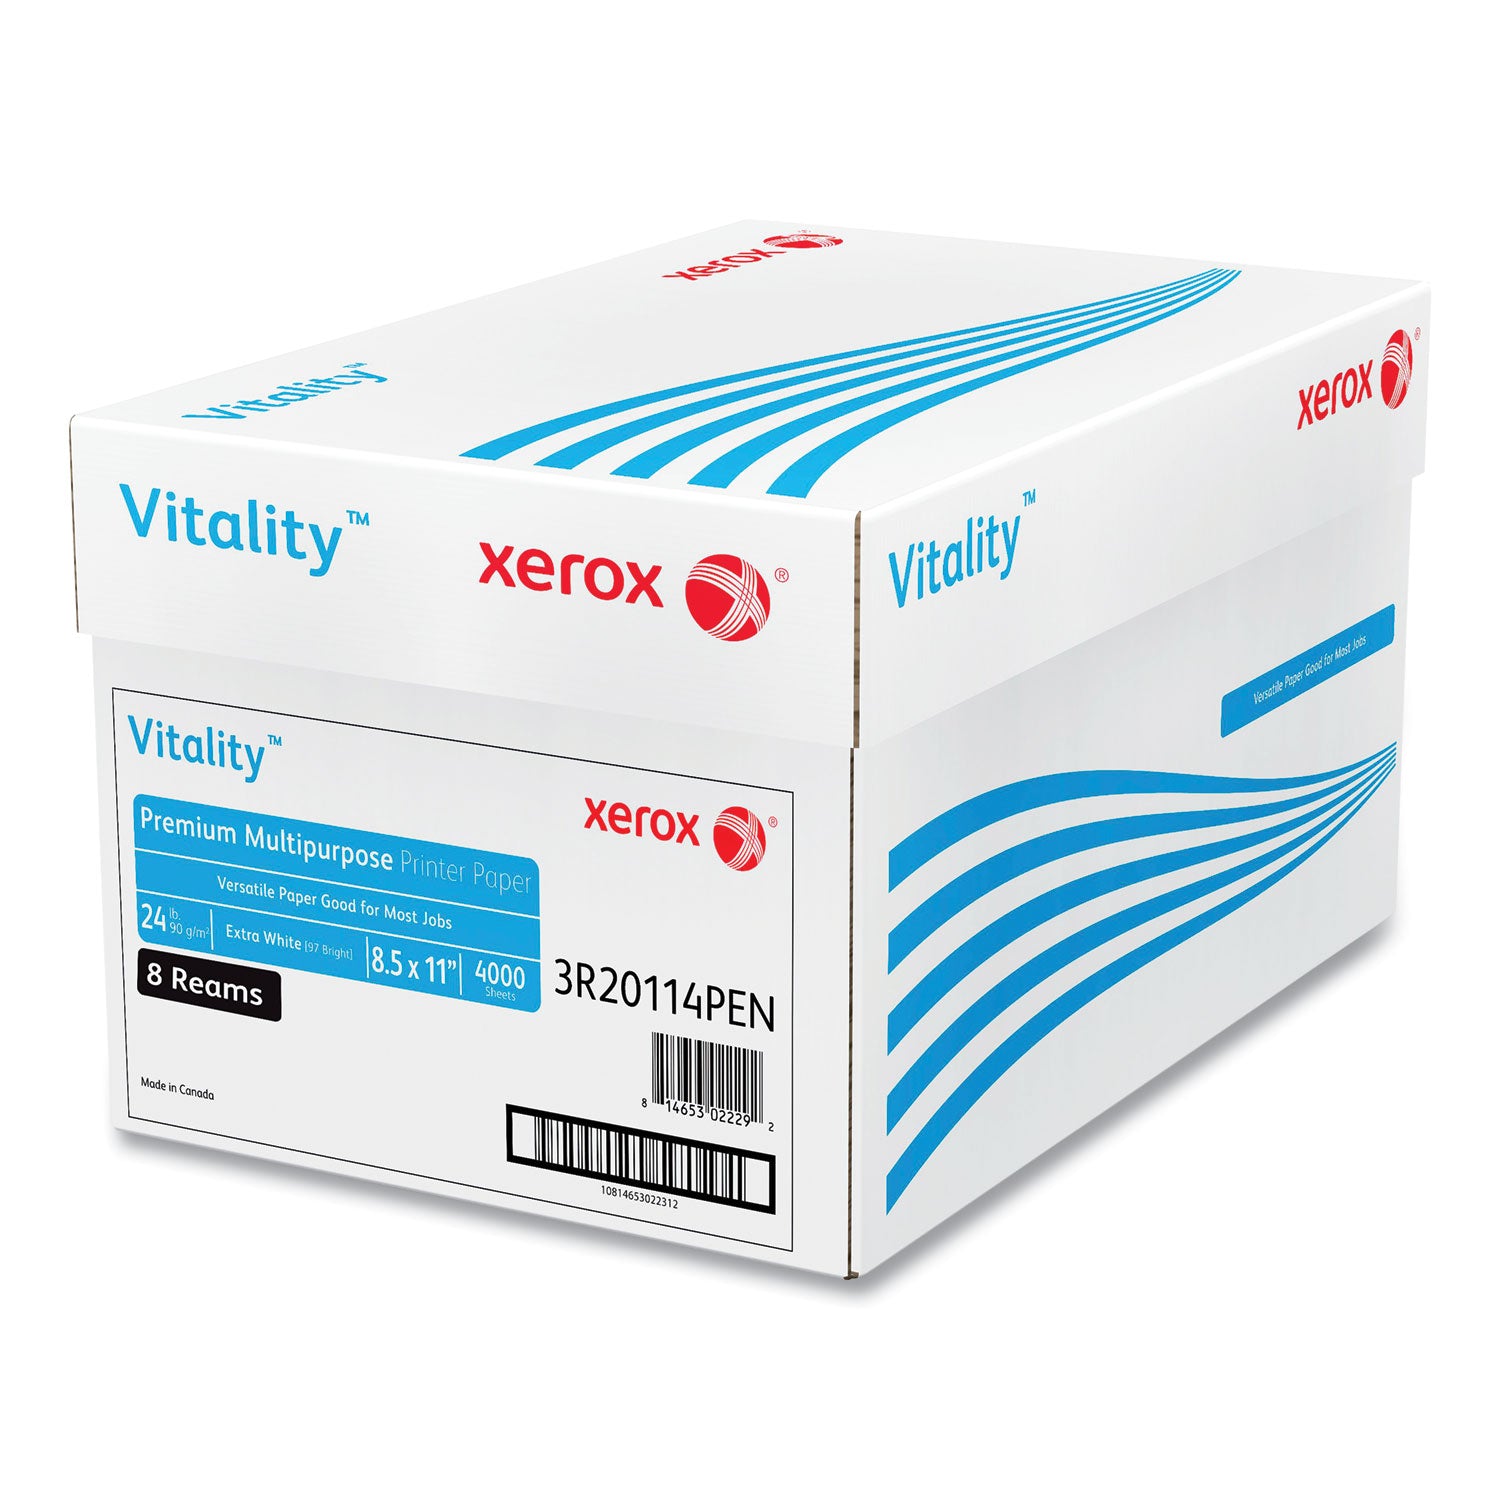 vitality-premium-multipurpose-print-paper-97-bright-24-lb-bond-weight-85-x-11-extra-white-500-ream-8-reams-carton_xer1001 - 1